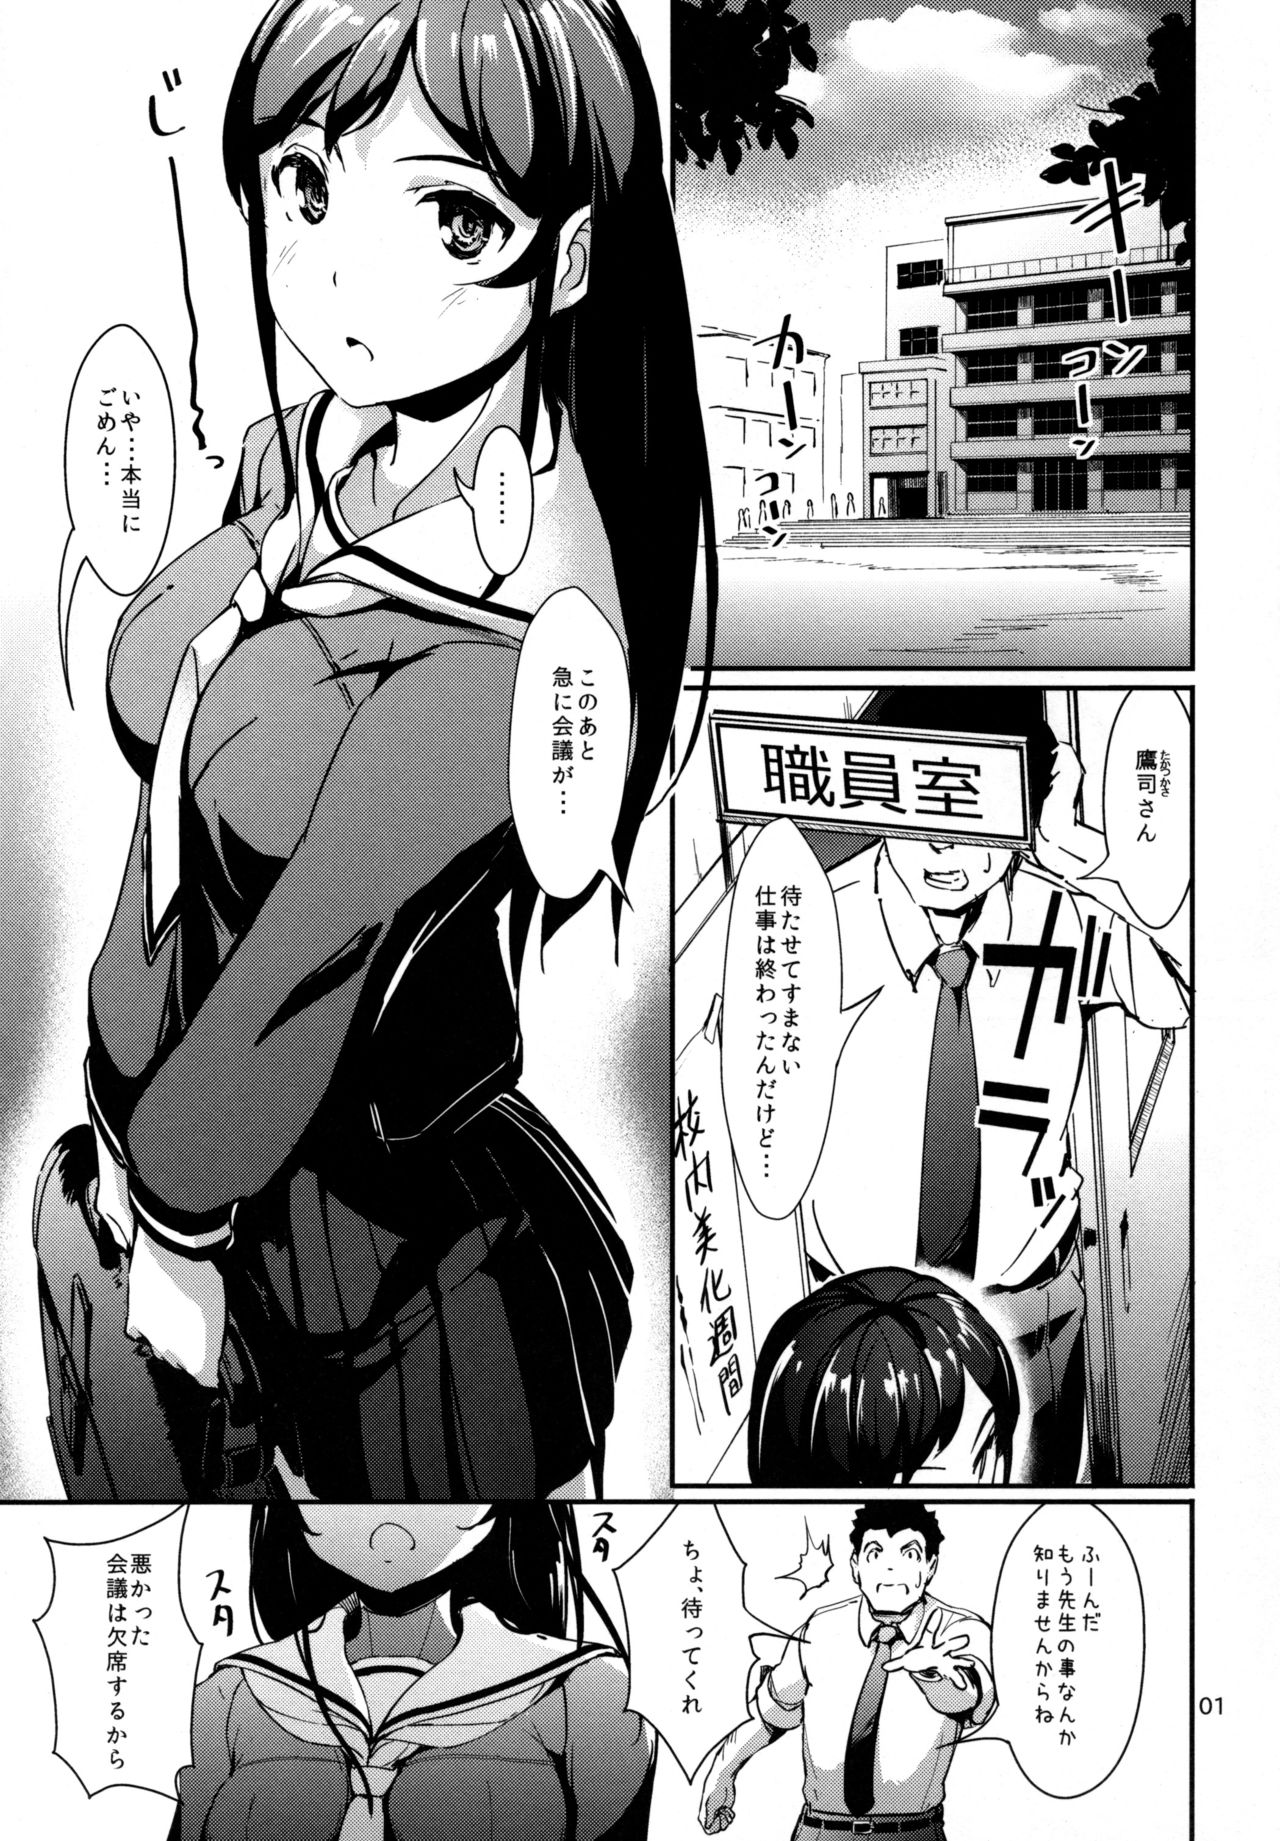 2019. full censorship. schoolgirl uniform. shimazu tekko. adminupdated. imp...